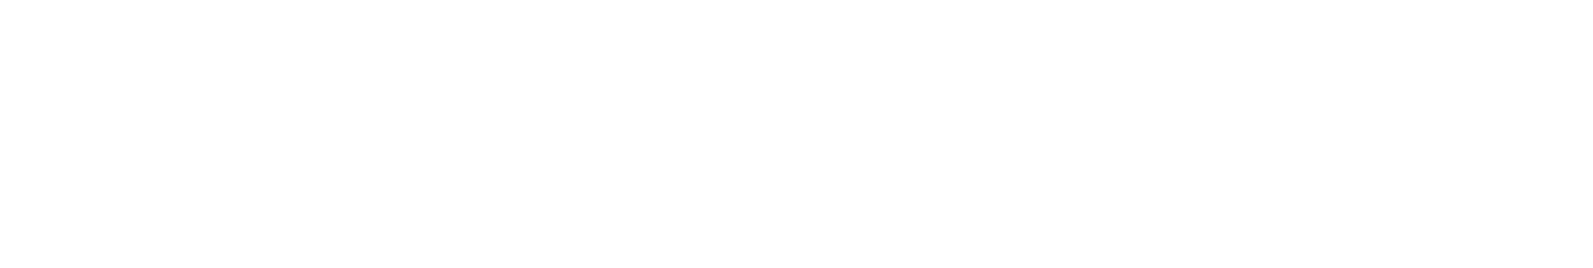 Wheaton Precious Metals Logo groß für dunkle Hintergründe (transparentes PNG)